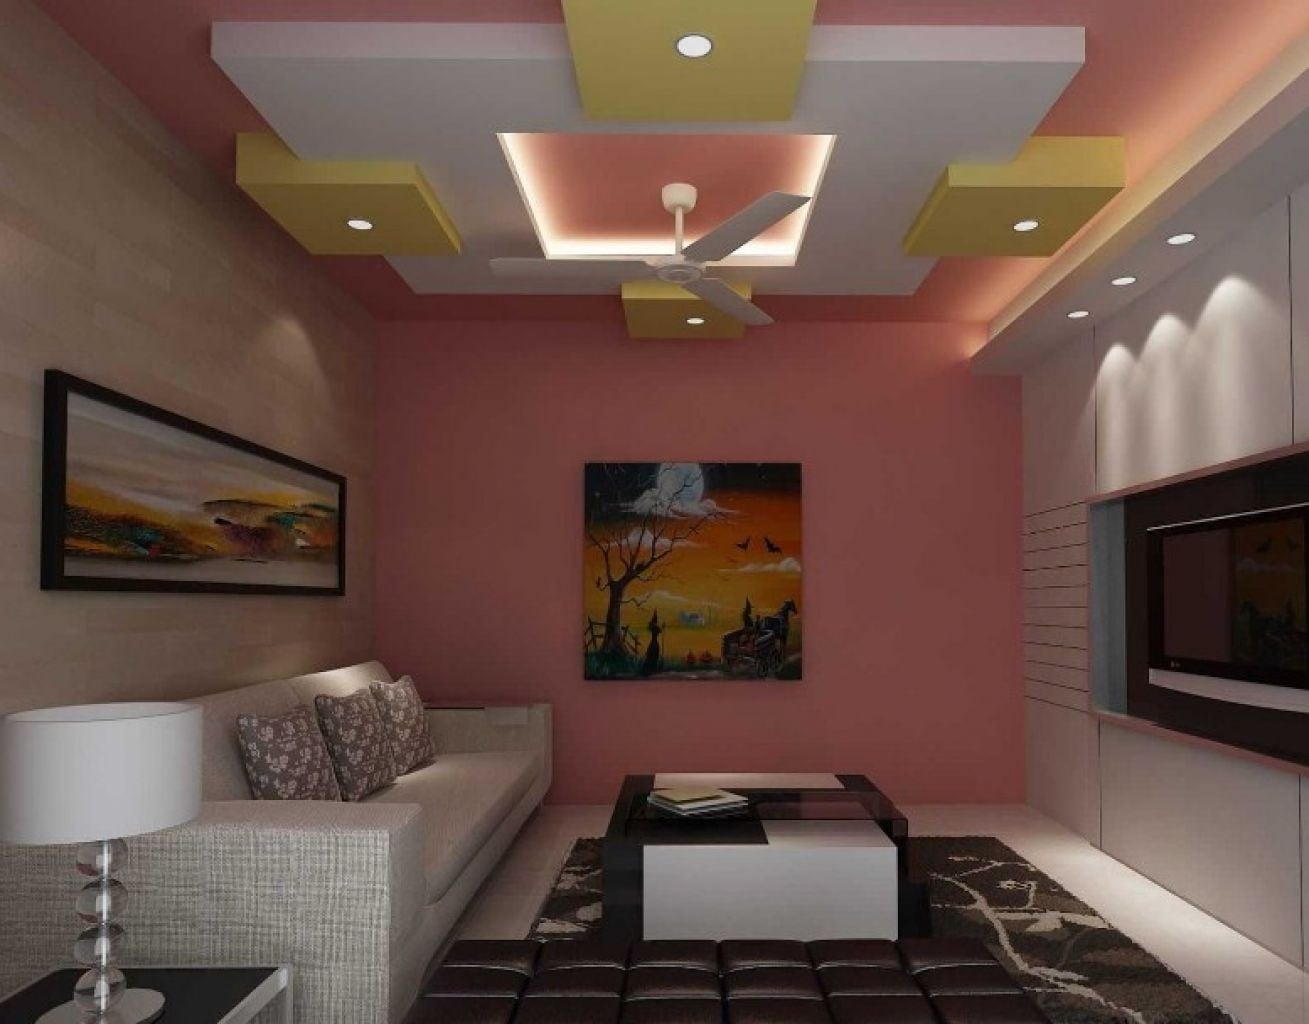 41 New Desain Plafon Ruang Tamu Minimalis Ukuran 3x3  Istimewa Banget Arcadia Design Architect